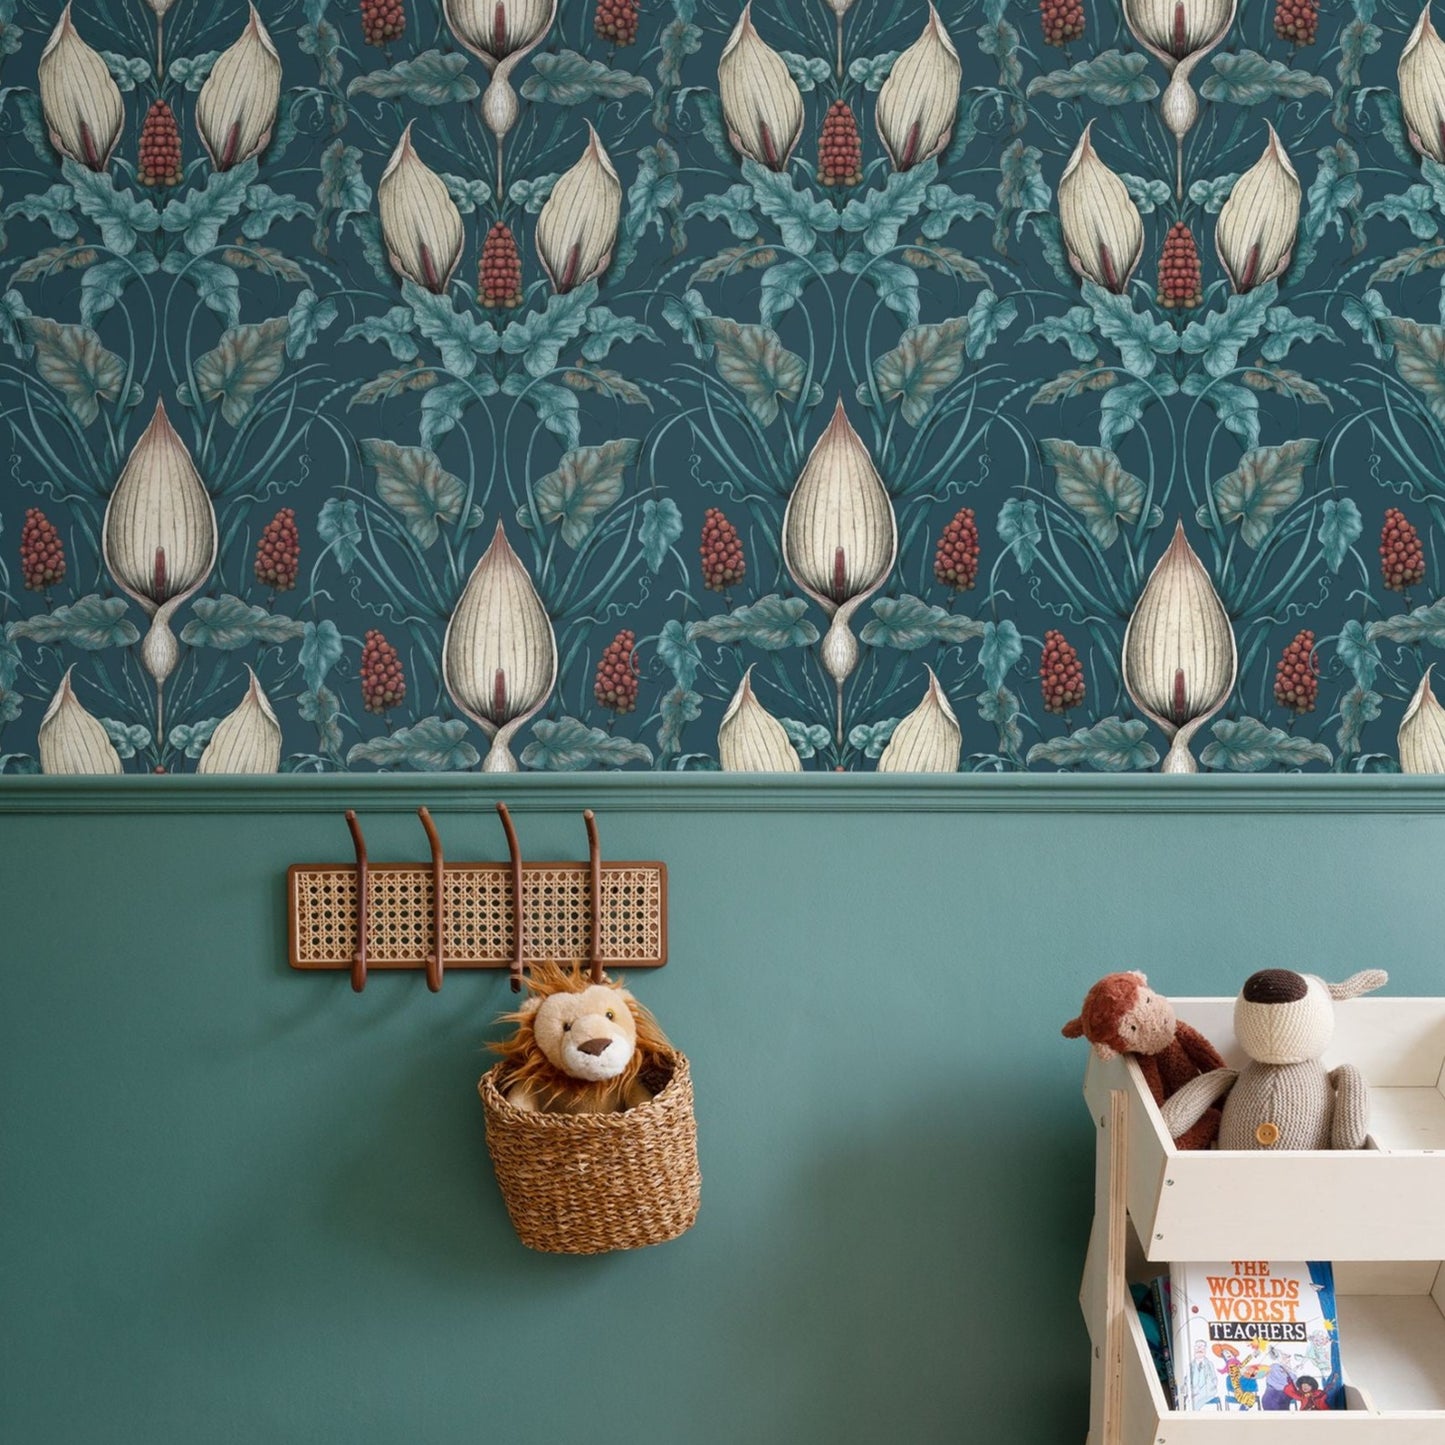 Alternative woodland inspired nursery wallpaper and interior decoration